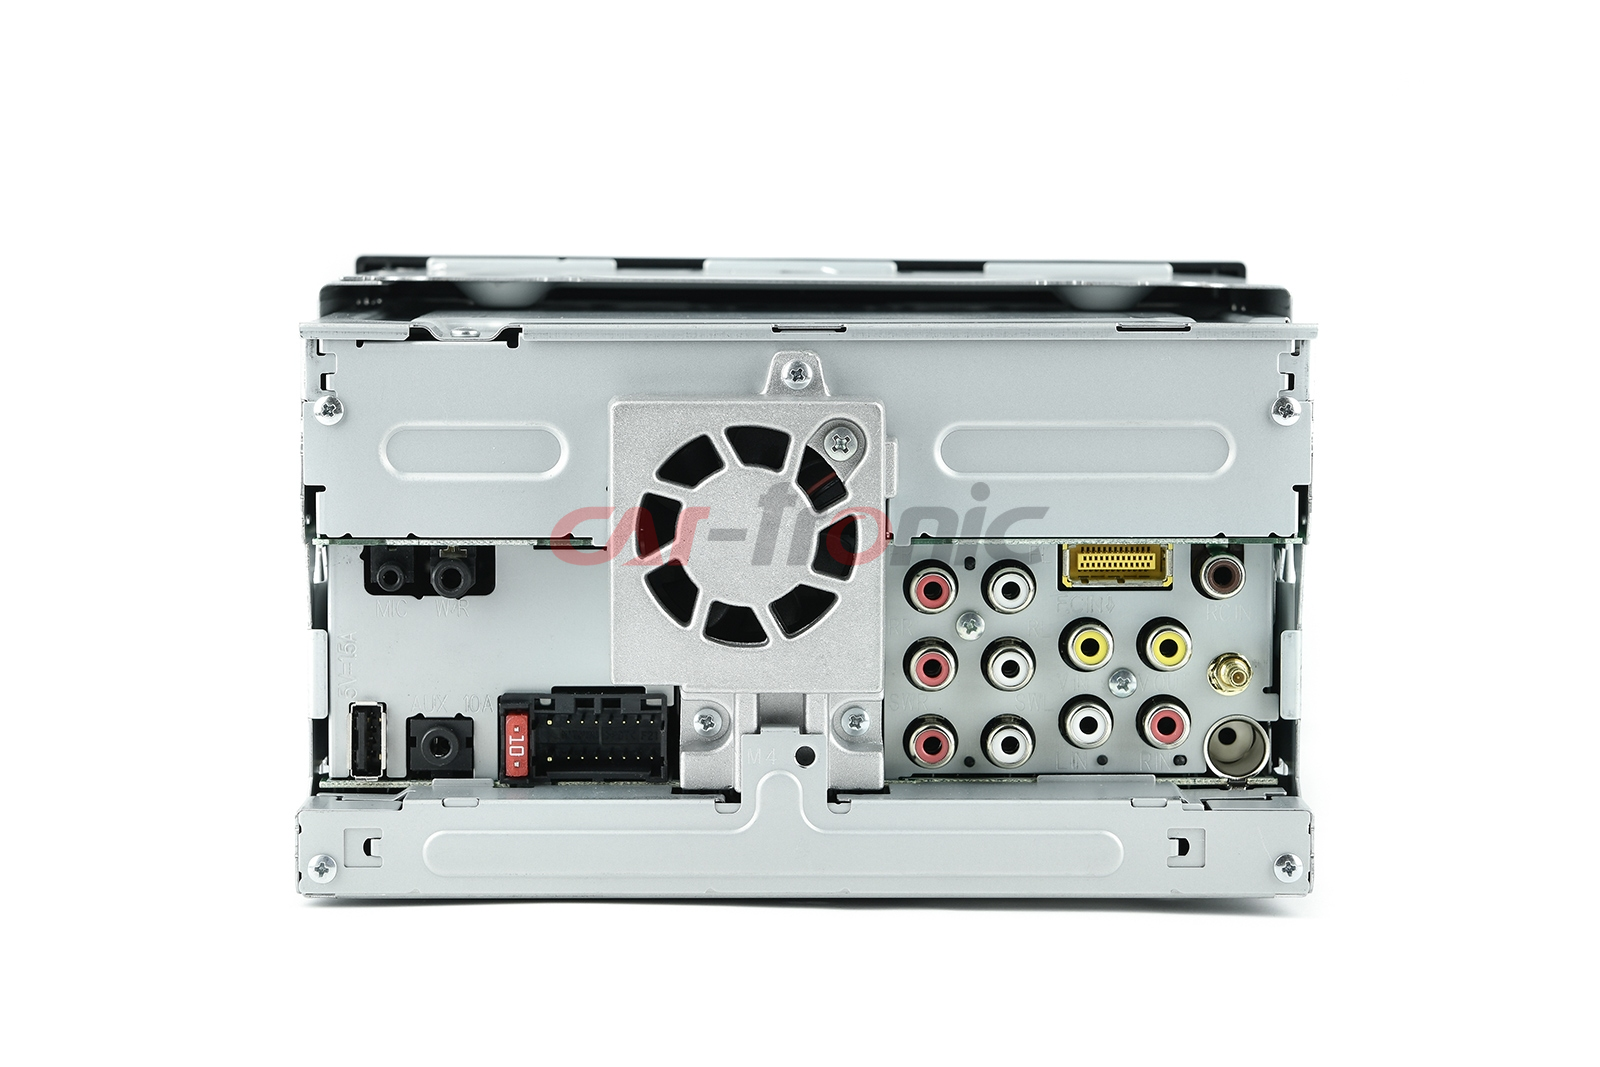 Stacja multimedialna Pioneer AVH-Z3200DAB.  Apple CarPlay.